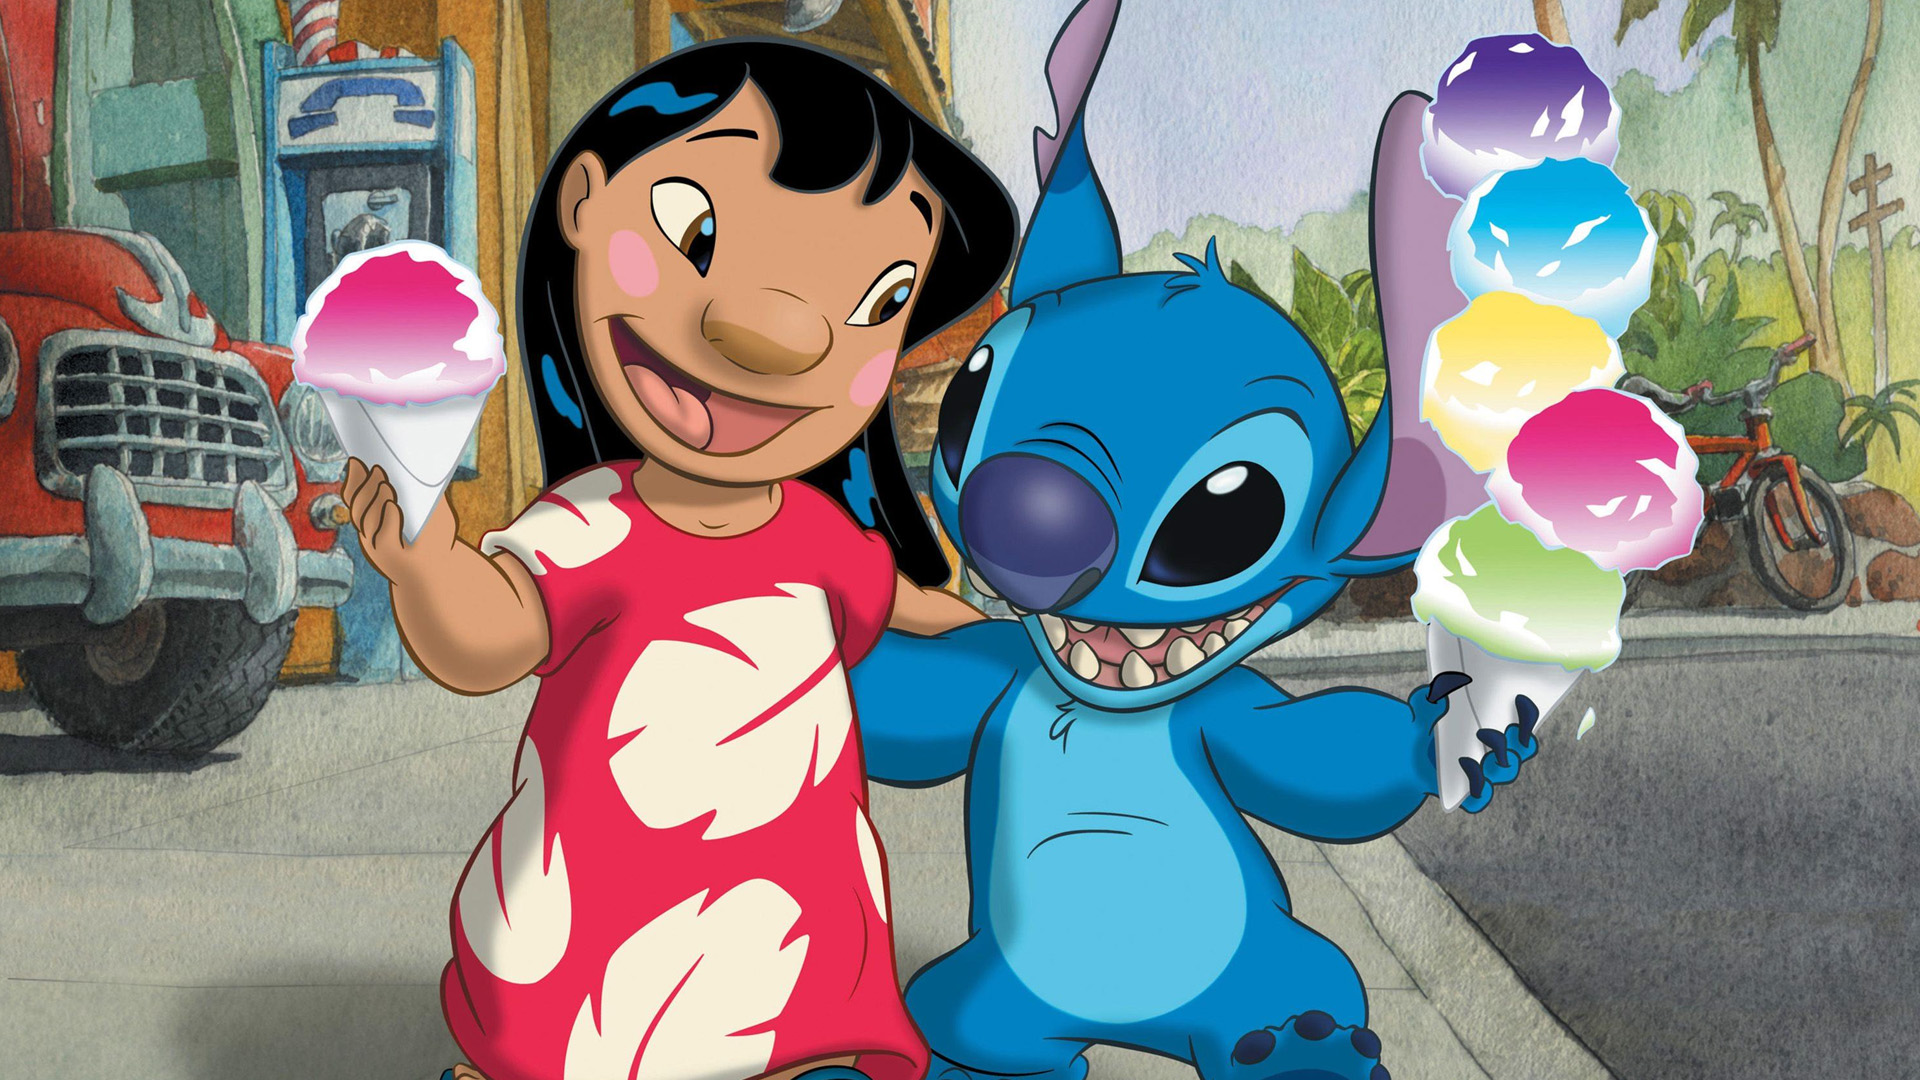 Lilo & Stitch: The Series (TV Series 2003 - 2005)